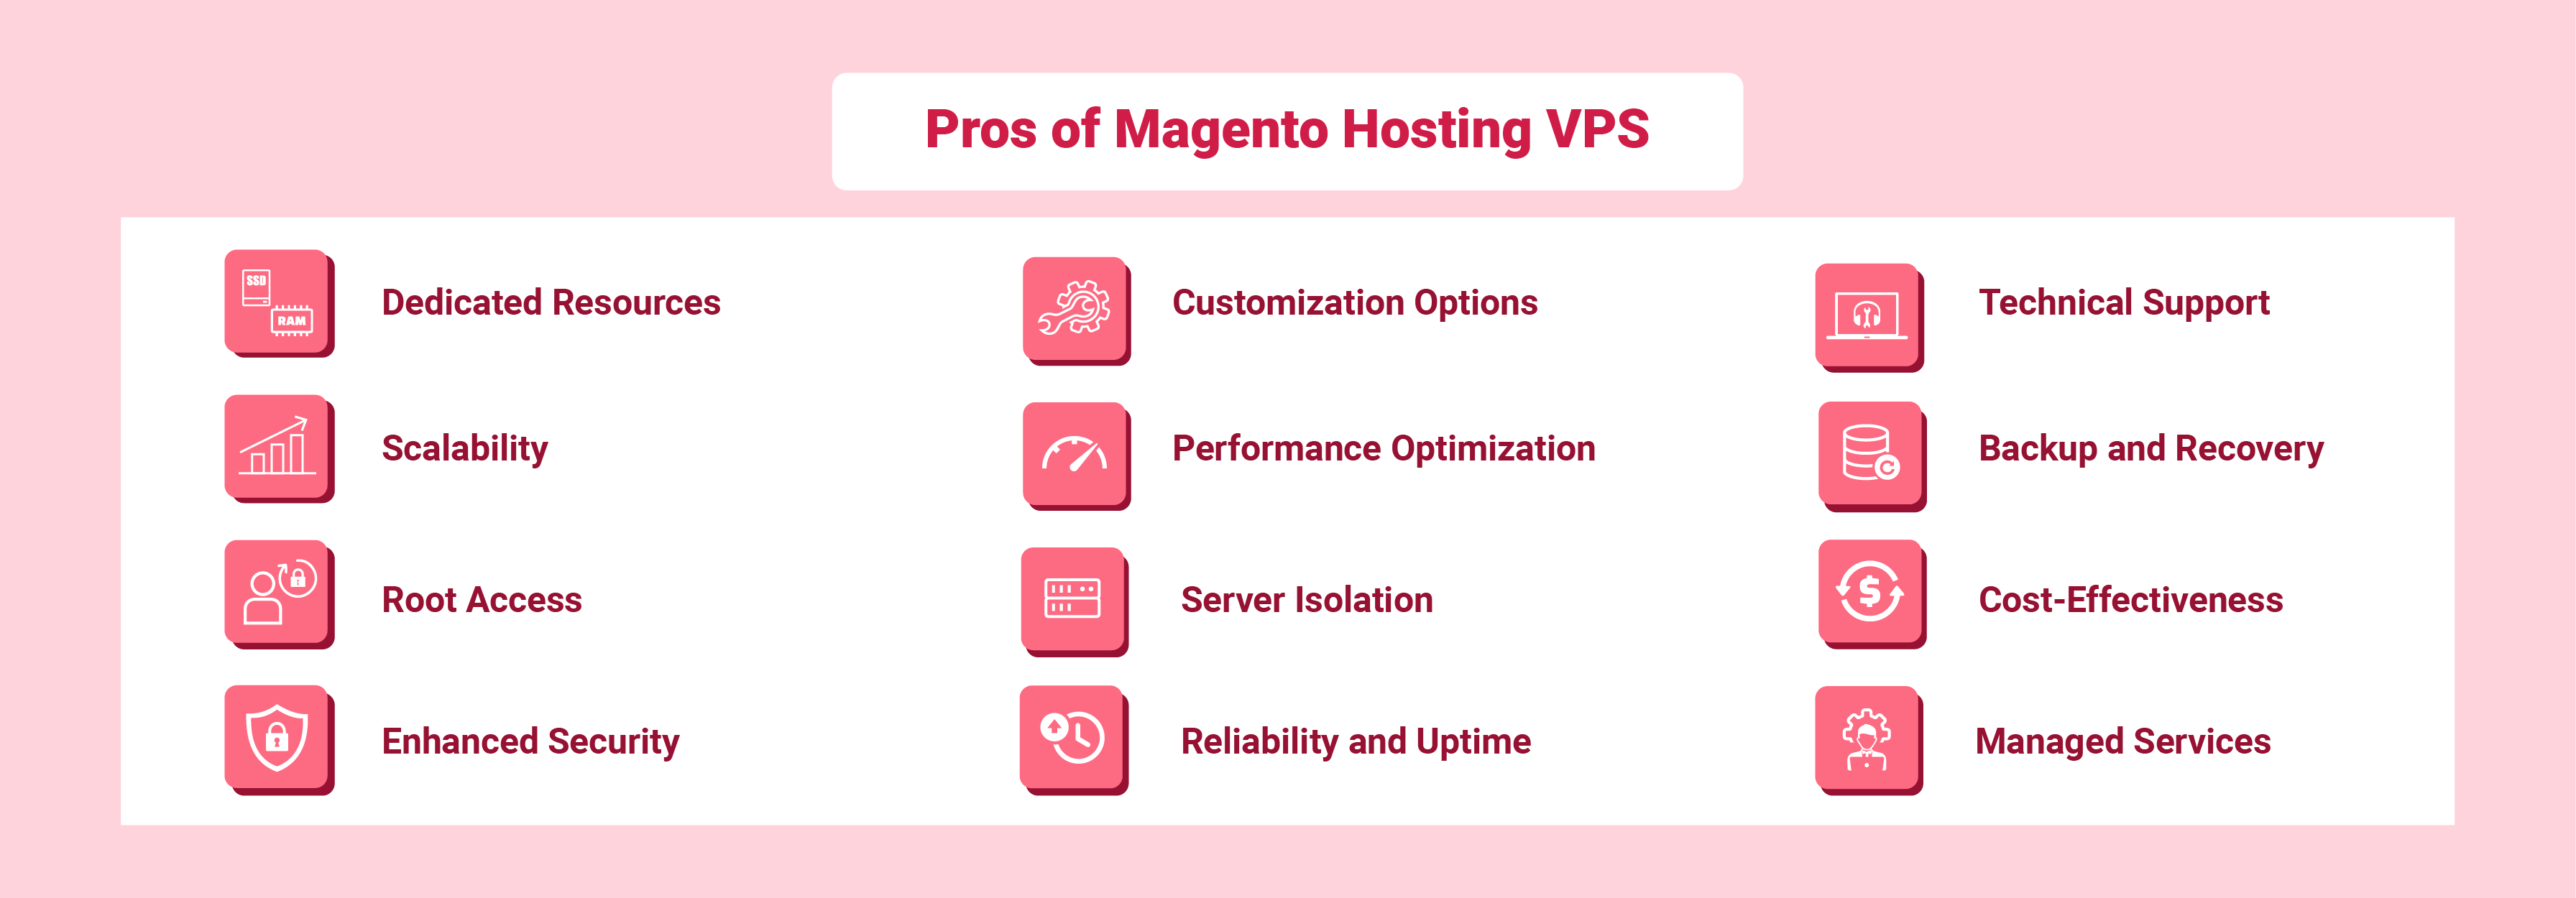 Pros of Magento Hosting VPS